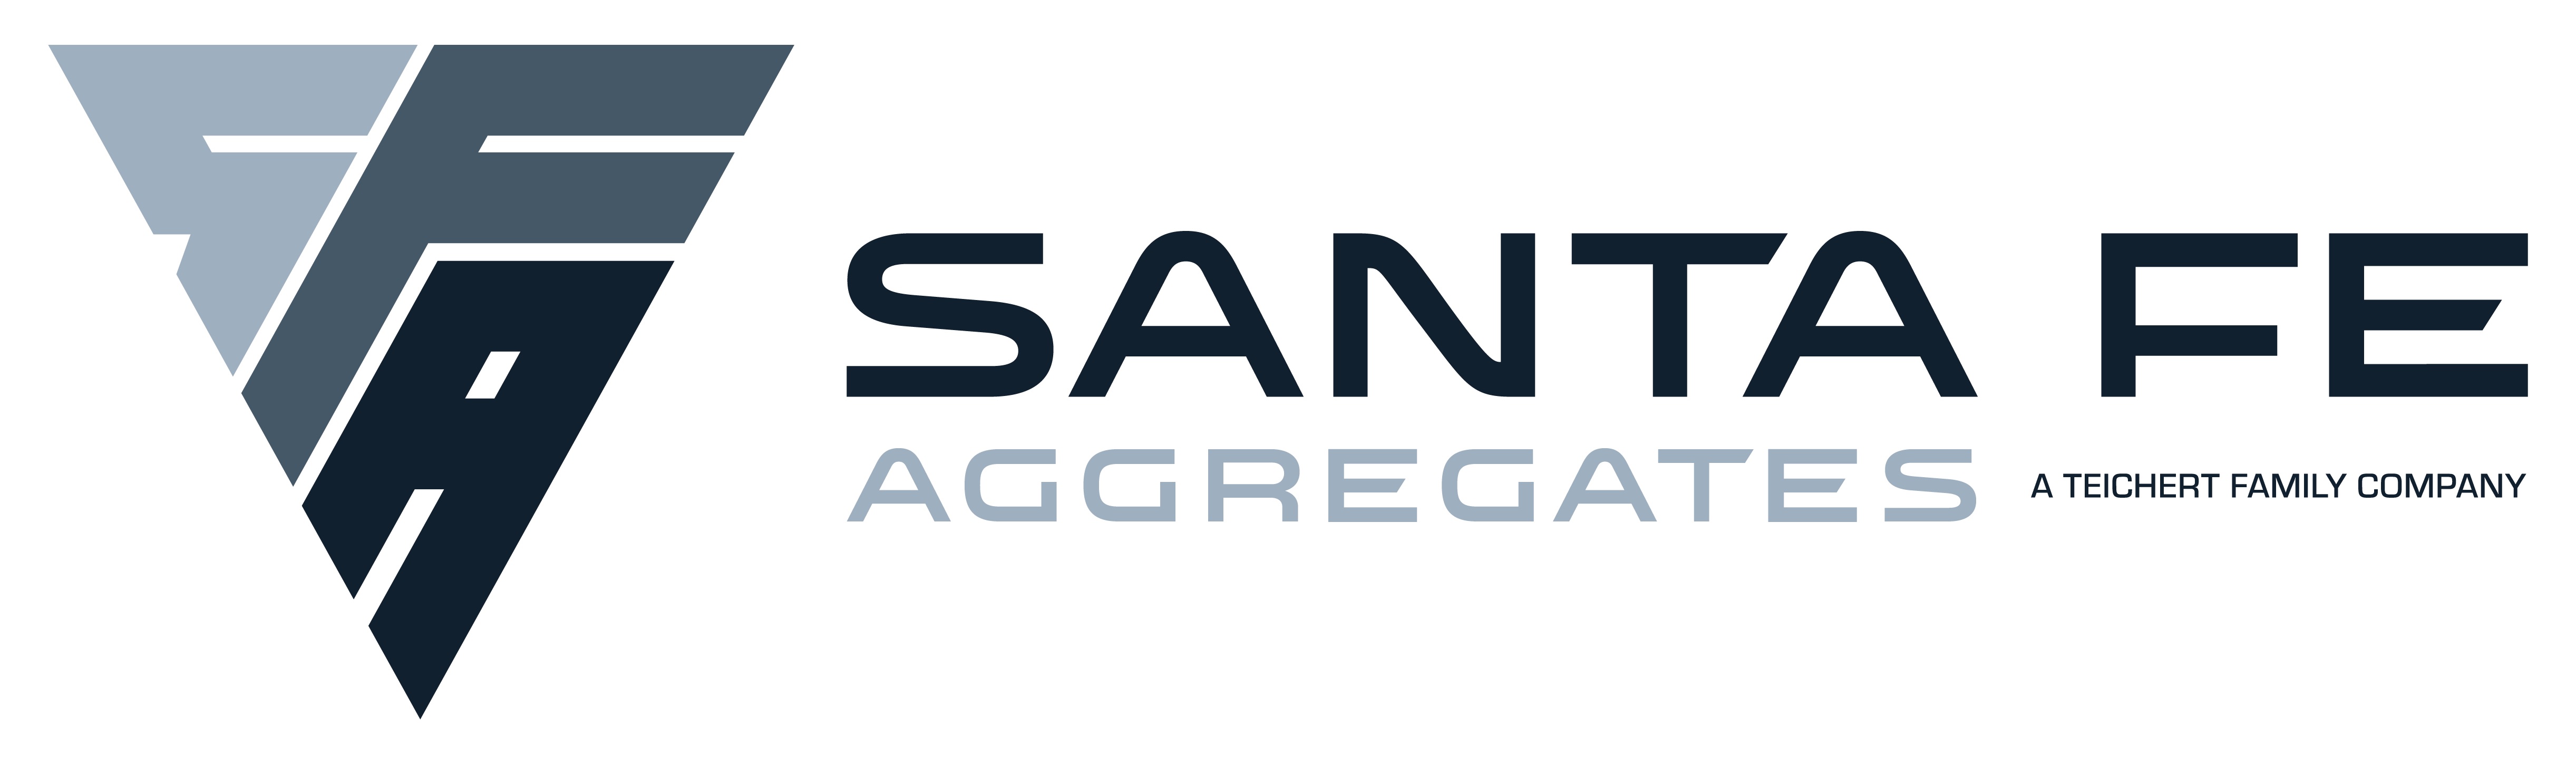 Santa Fe Aggregates, Inc. logo